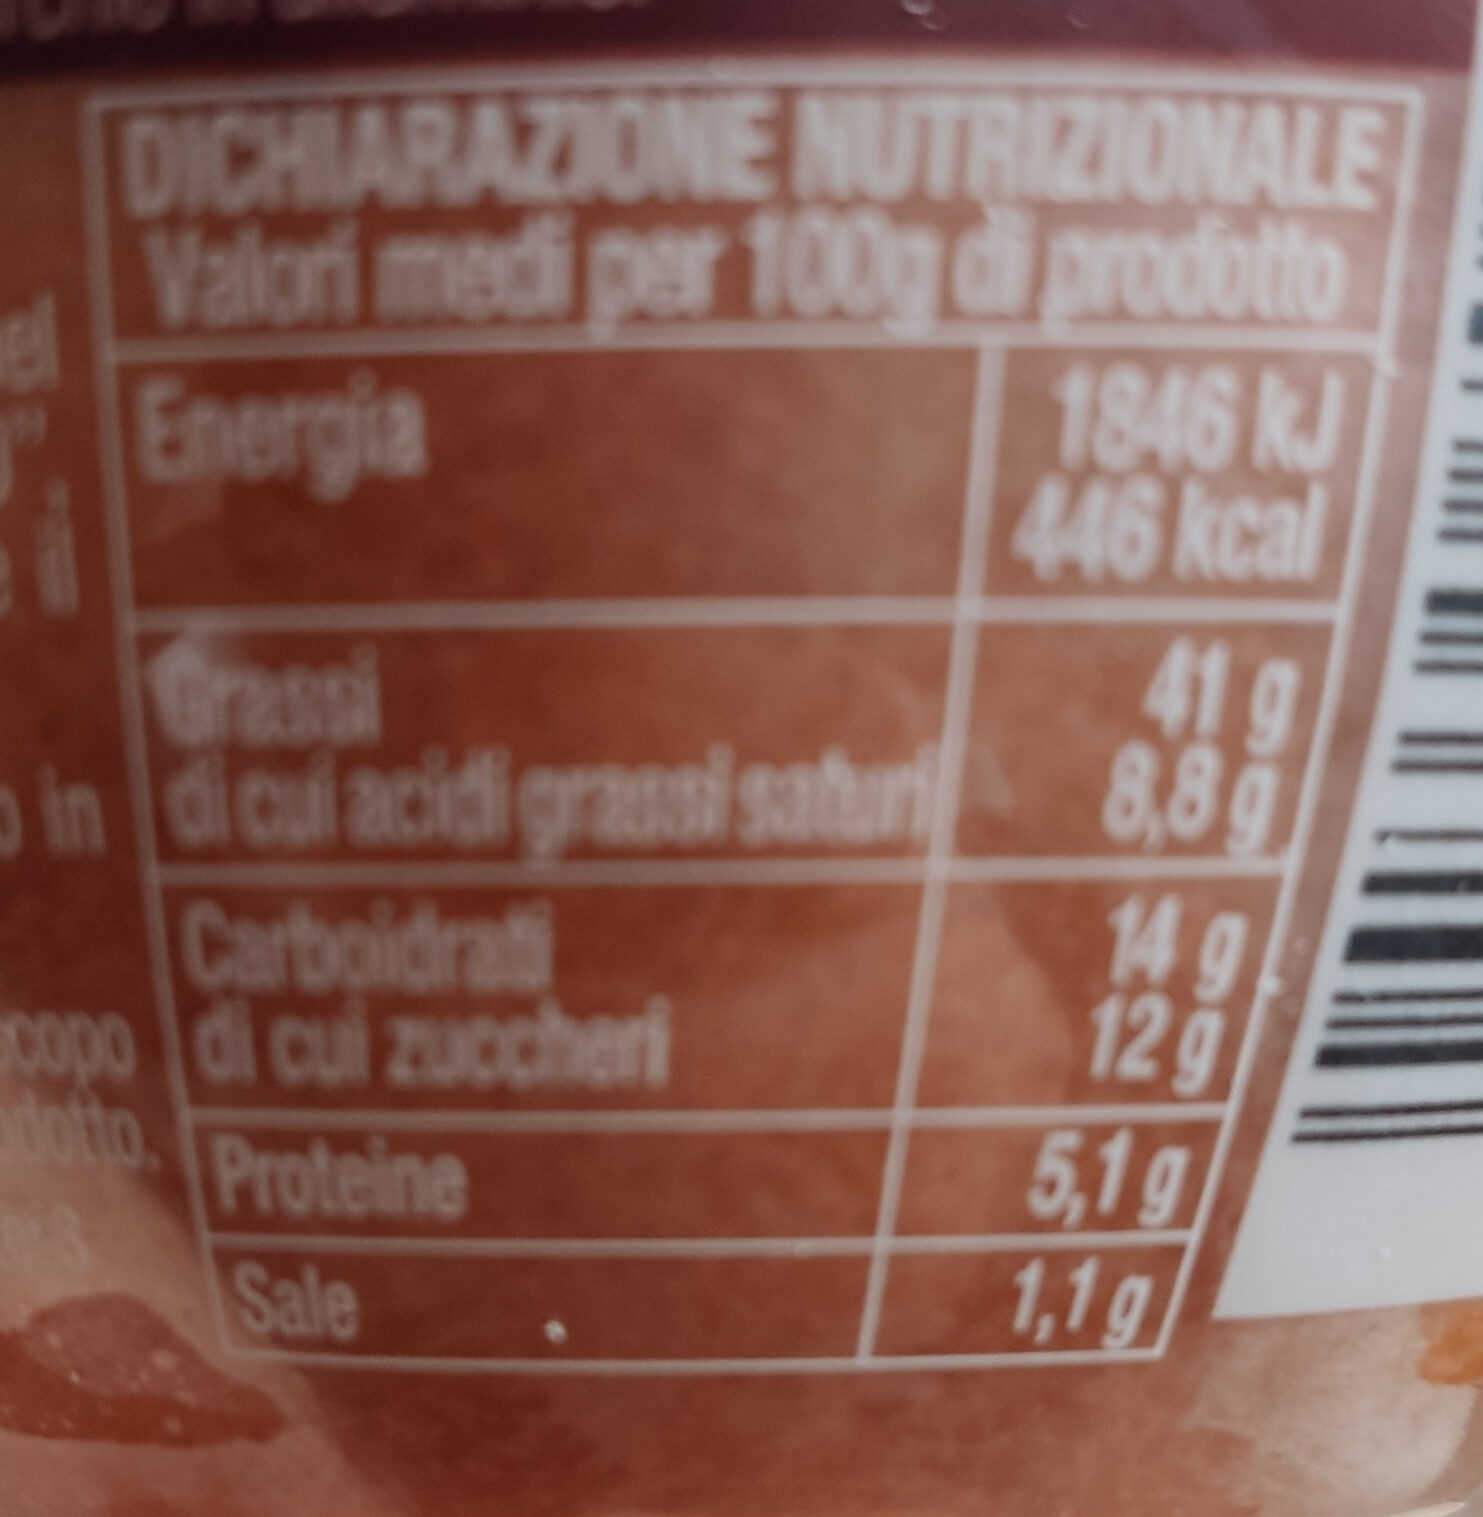 Pesto alla mediterranea - Nutrition facts - it